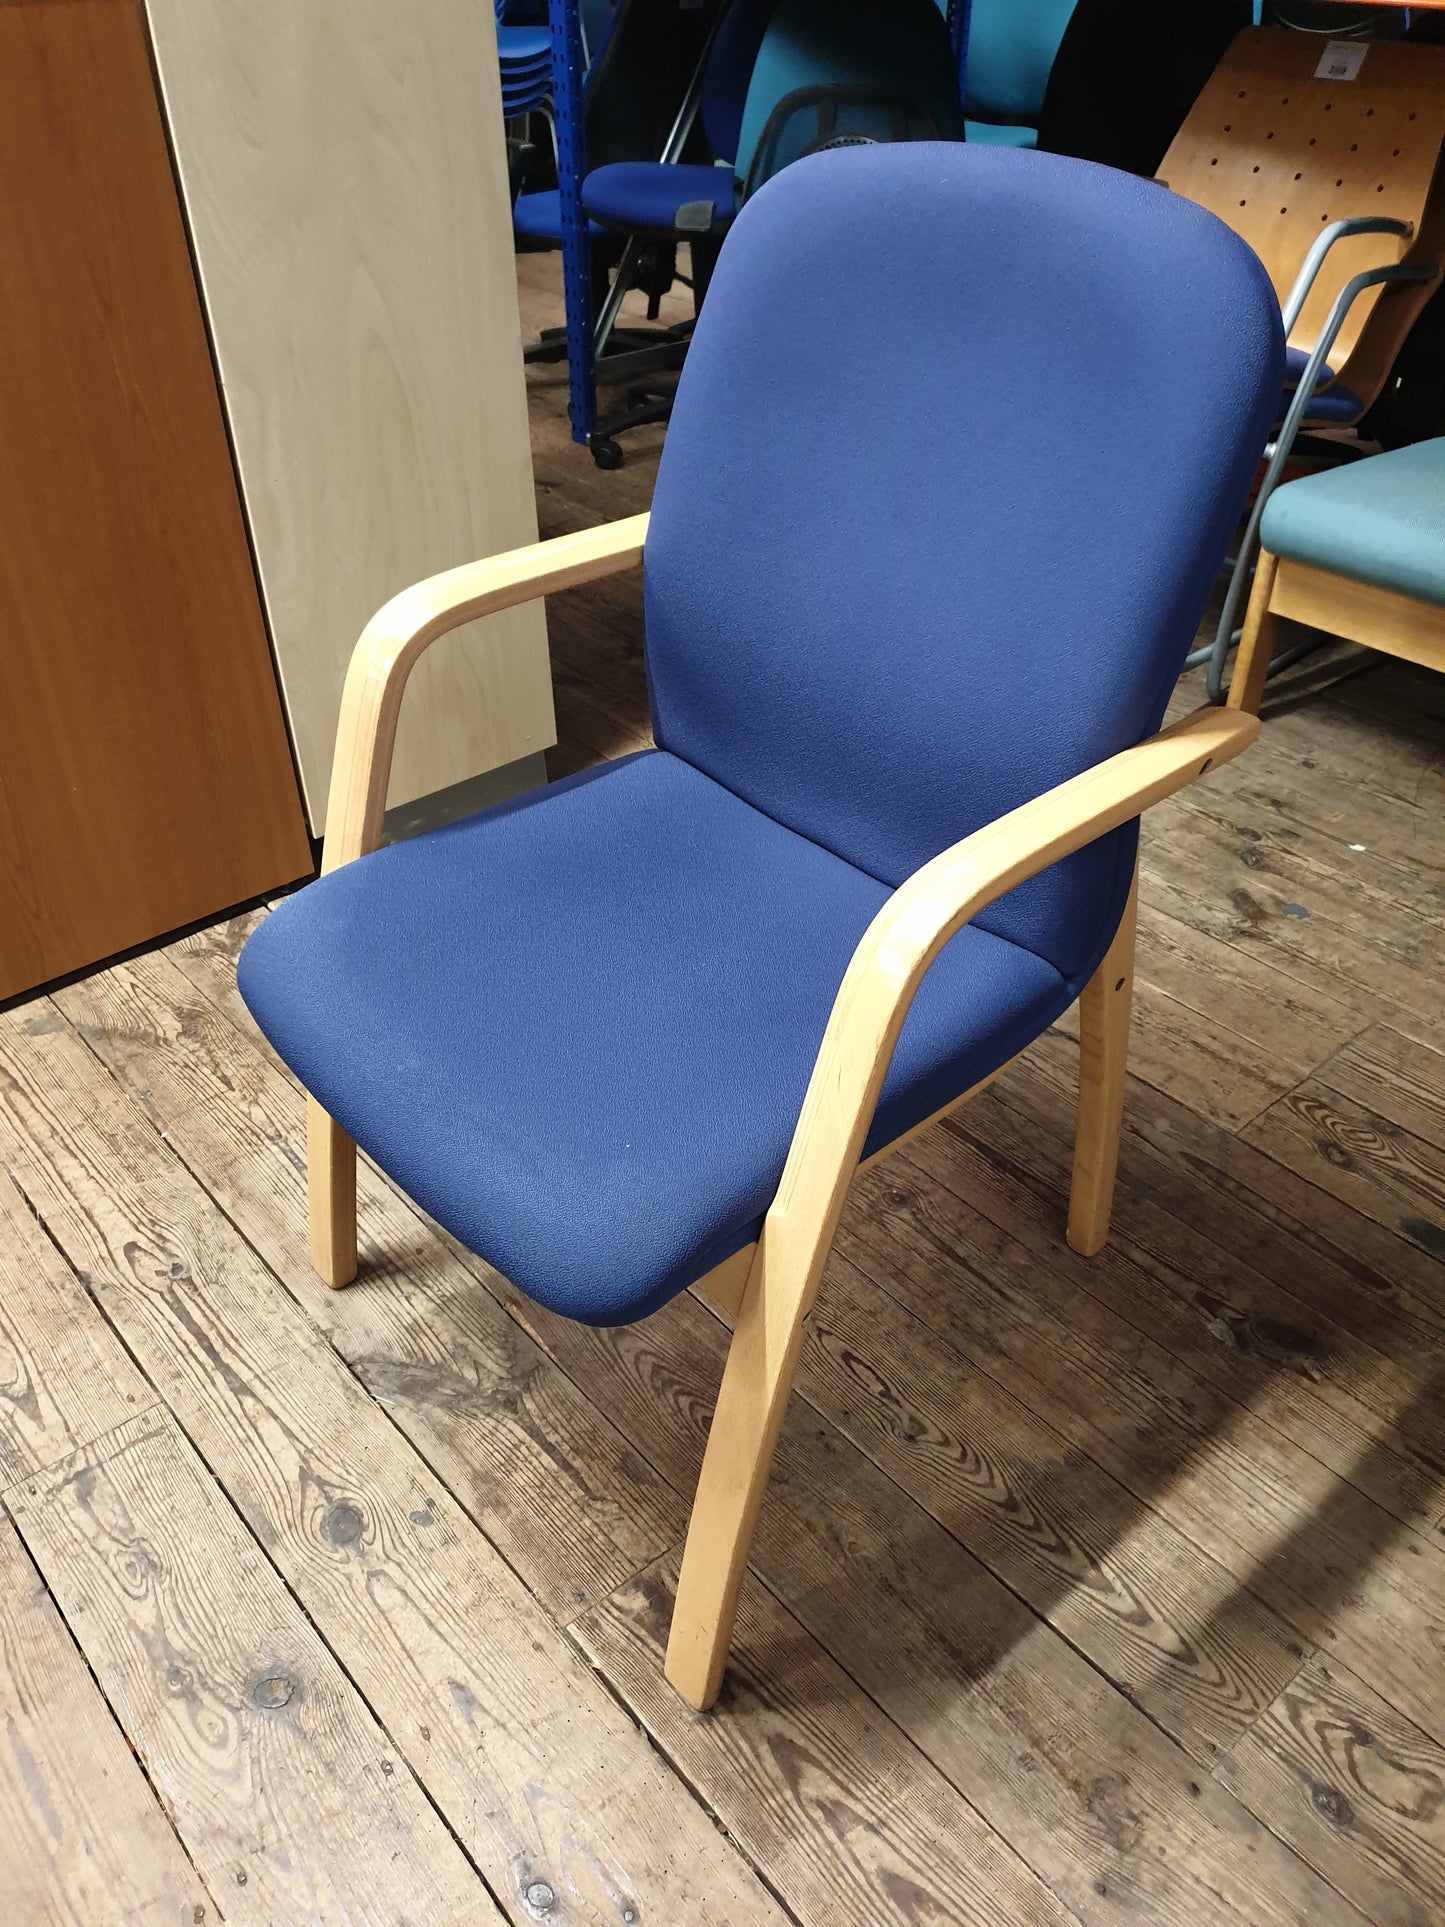 Blue waiting room chair